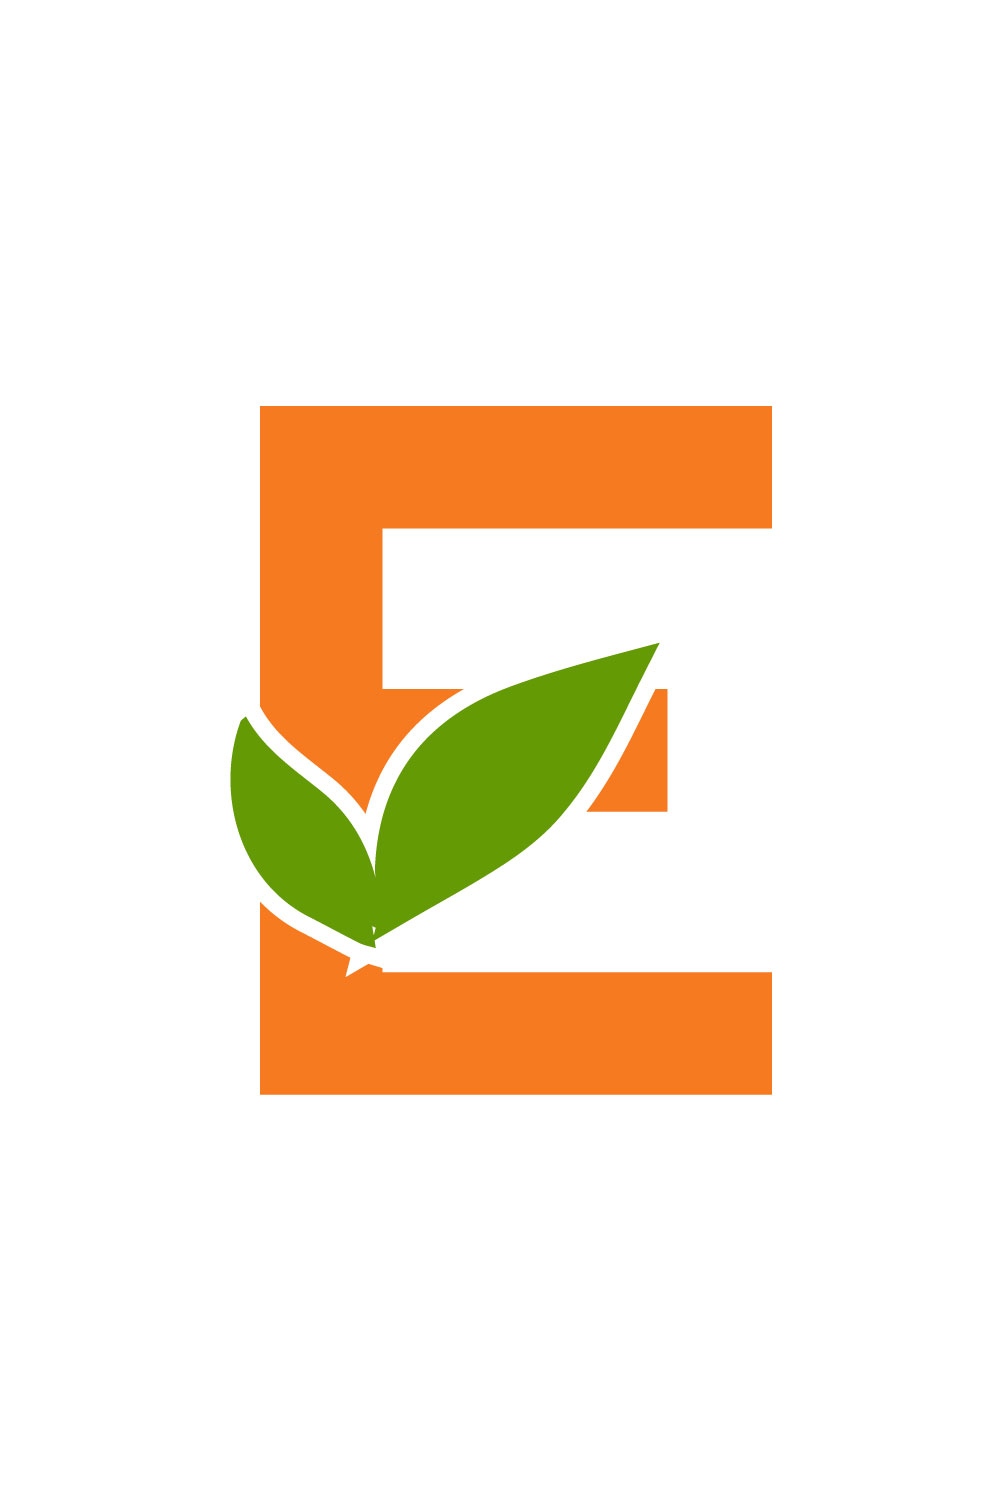 Free E floral logo pinterest preview image.